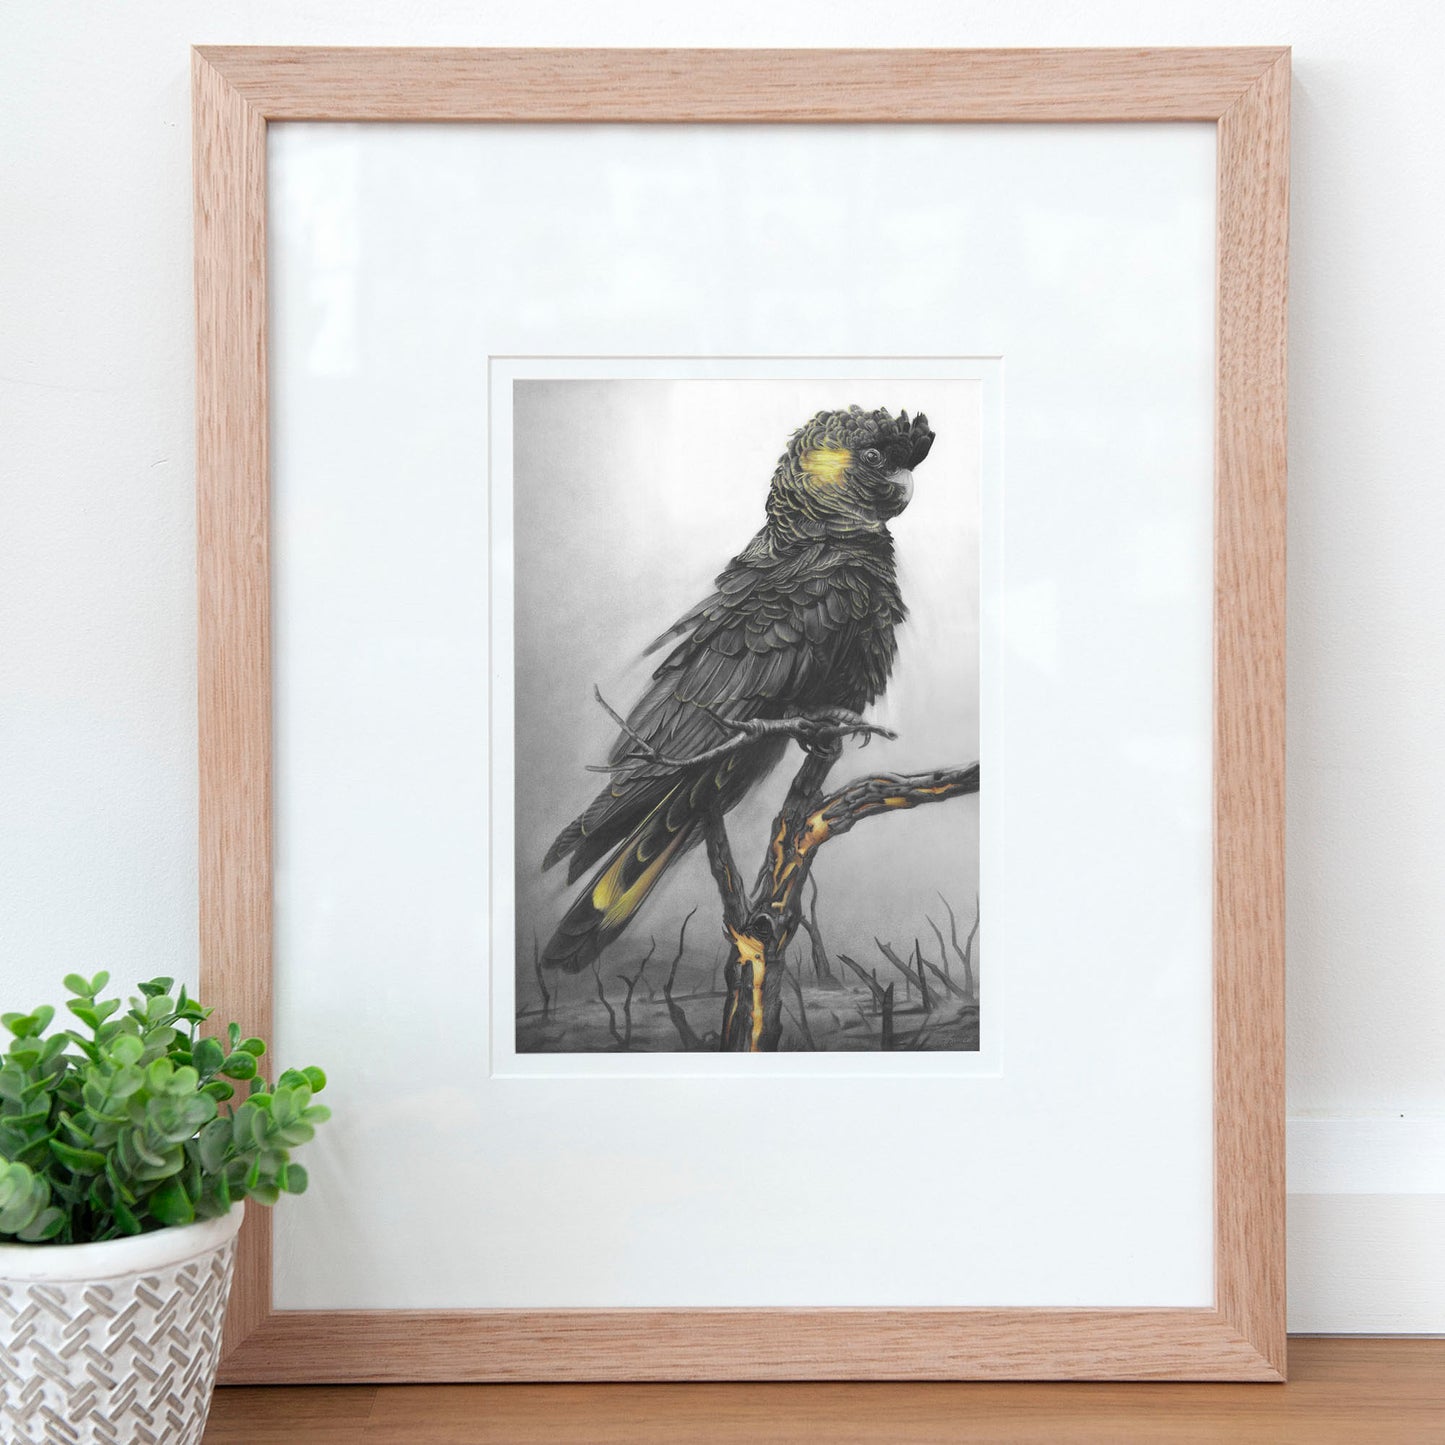 'Black Cockatoo' art print